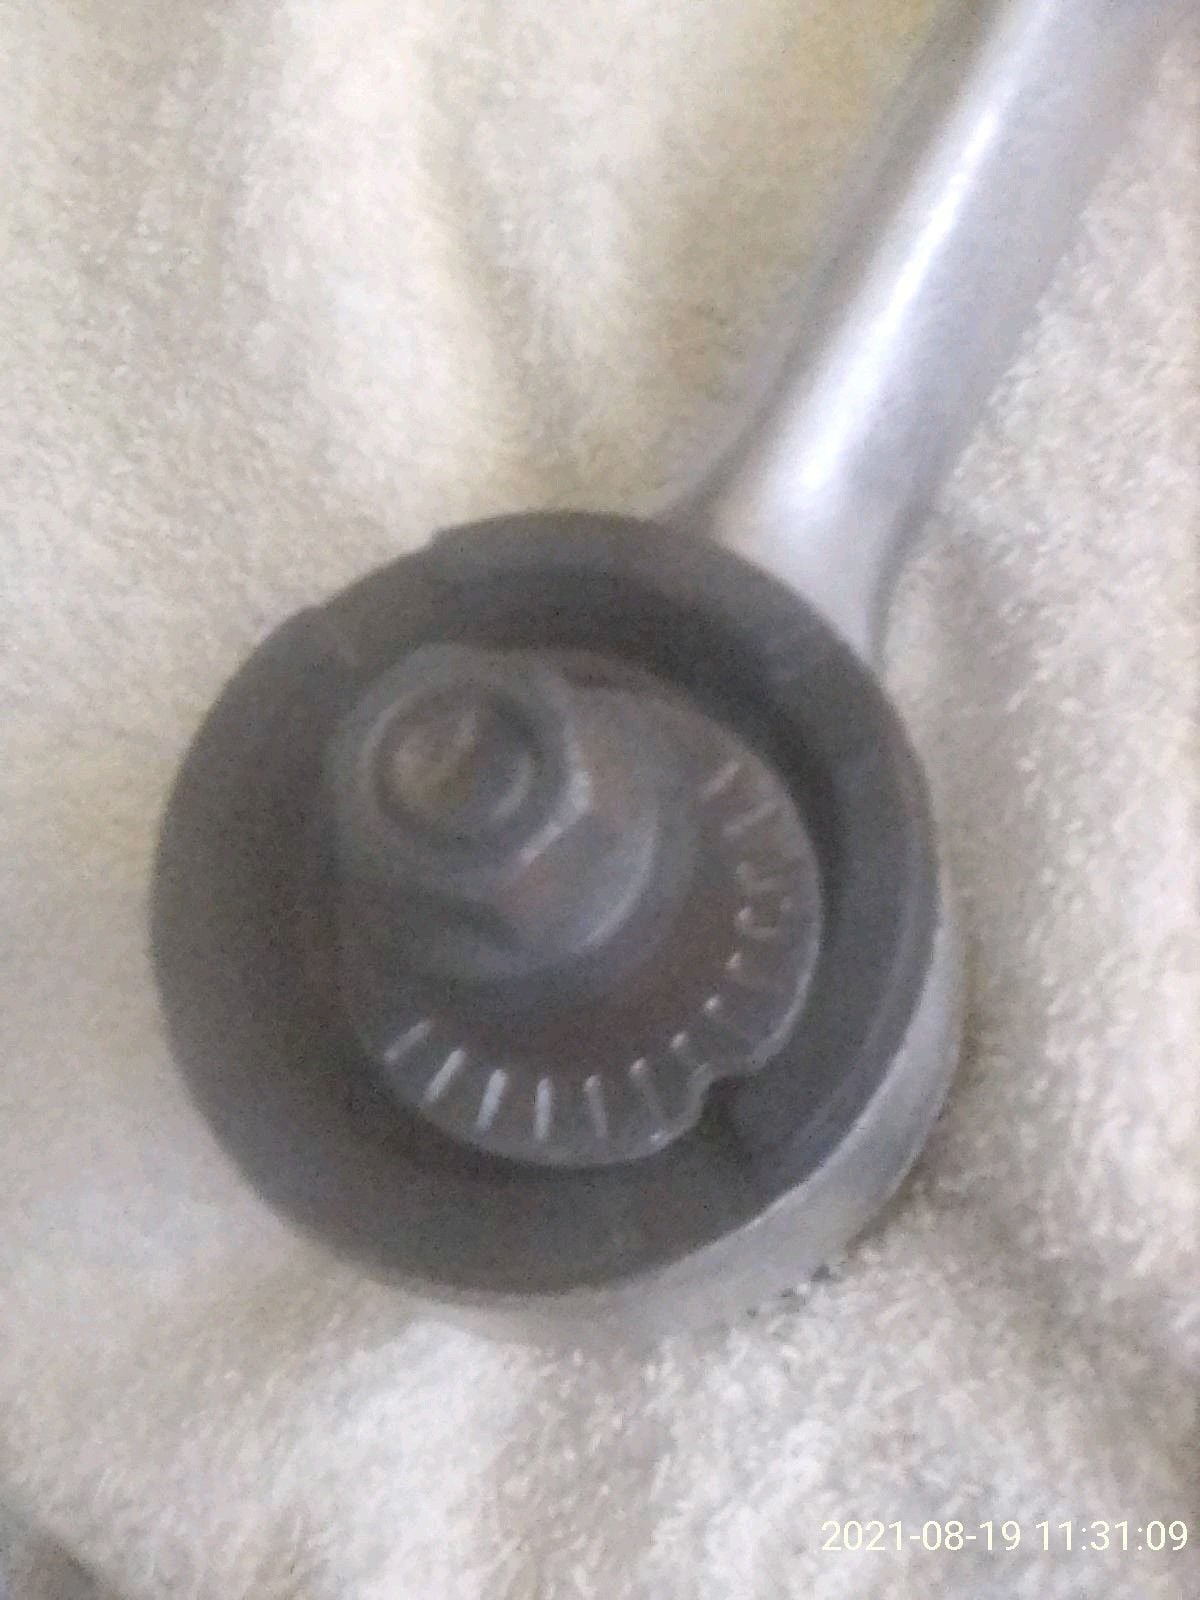 Steering/Suspension - FD - OEM Left Rear Lower I-Arm - Used - 1993 to 2002 Mazda RX-7 - San Jose, CA 95121, United States